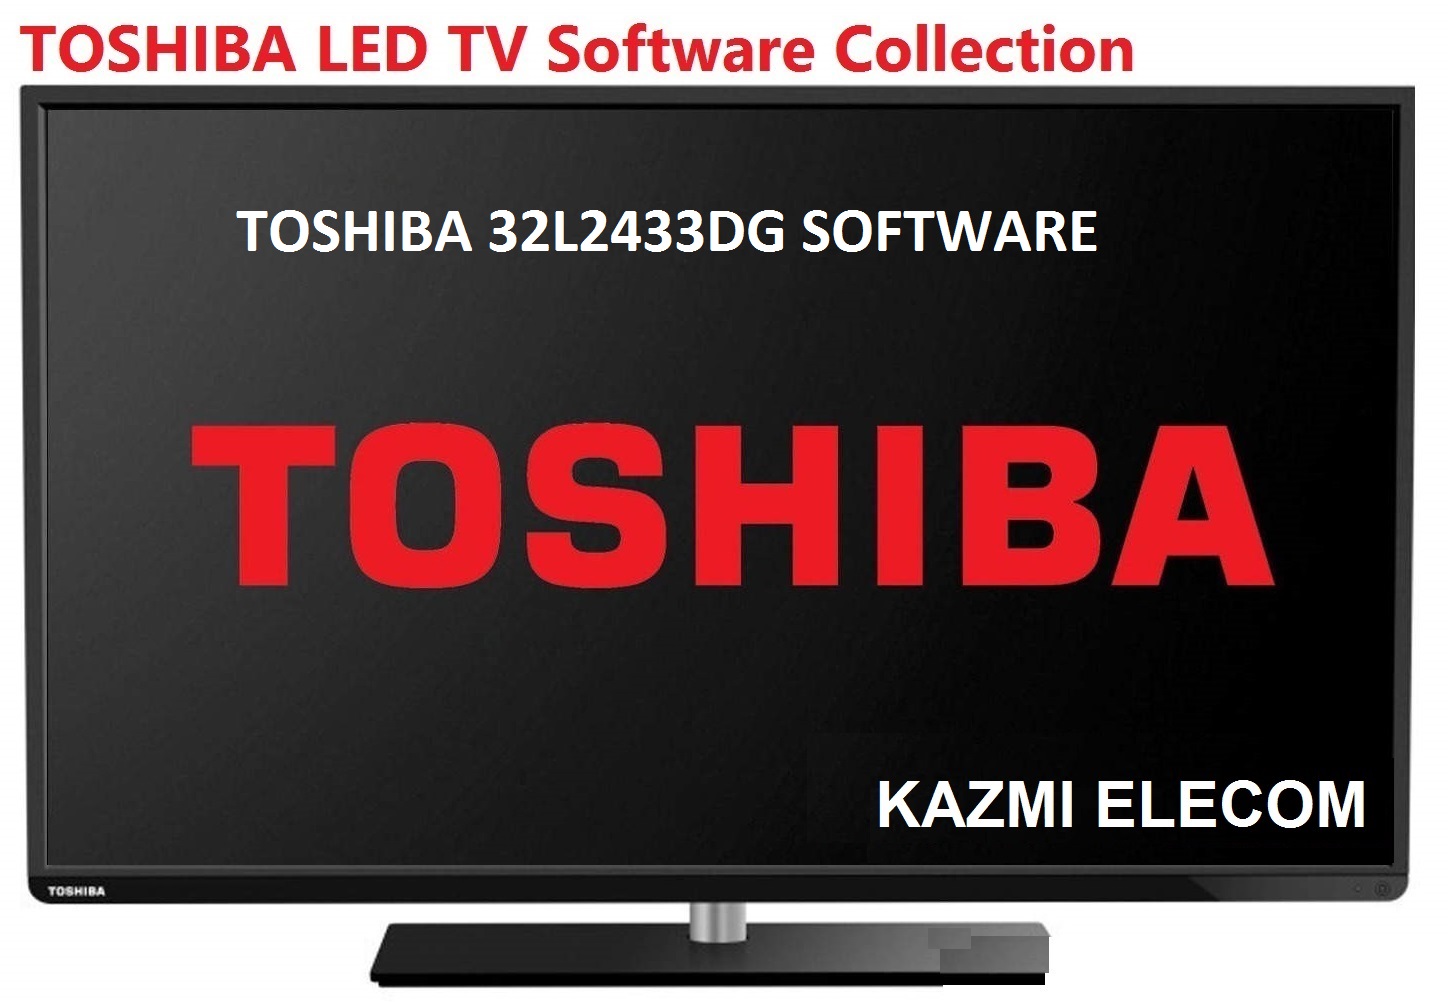 Toshiba 32L2433Dg